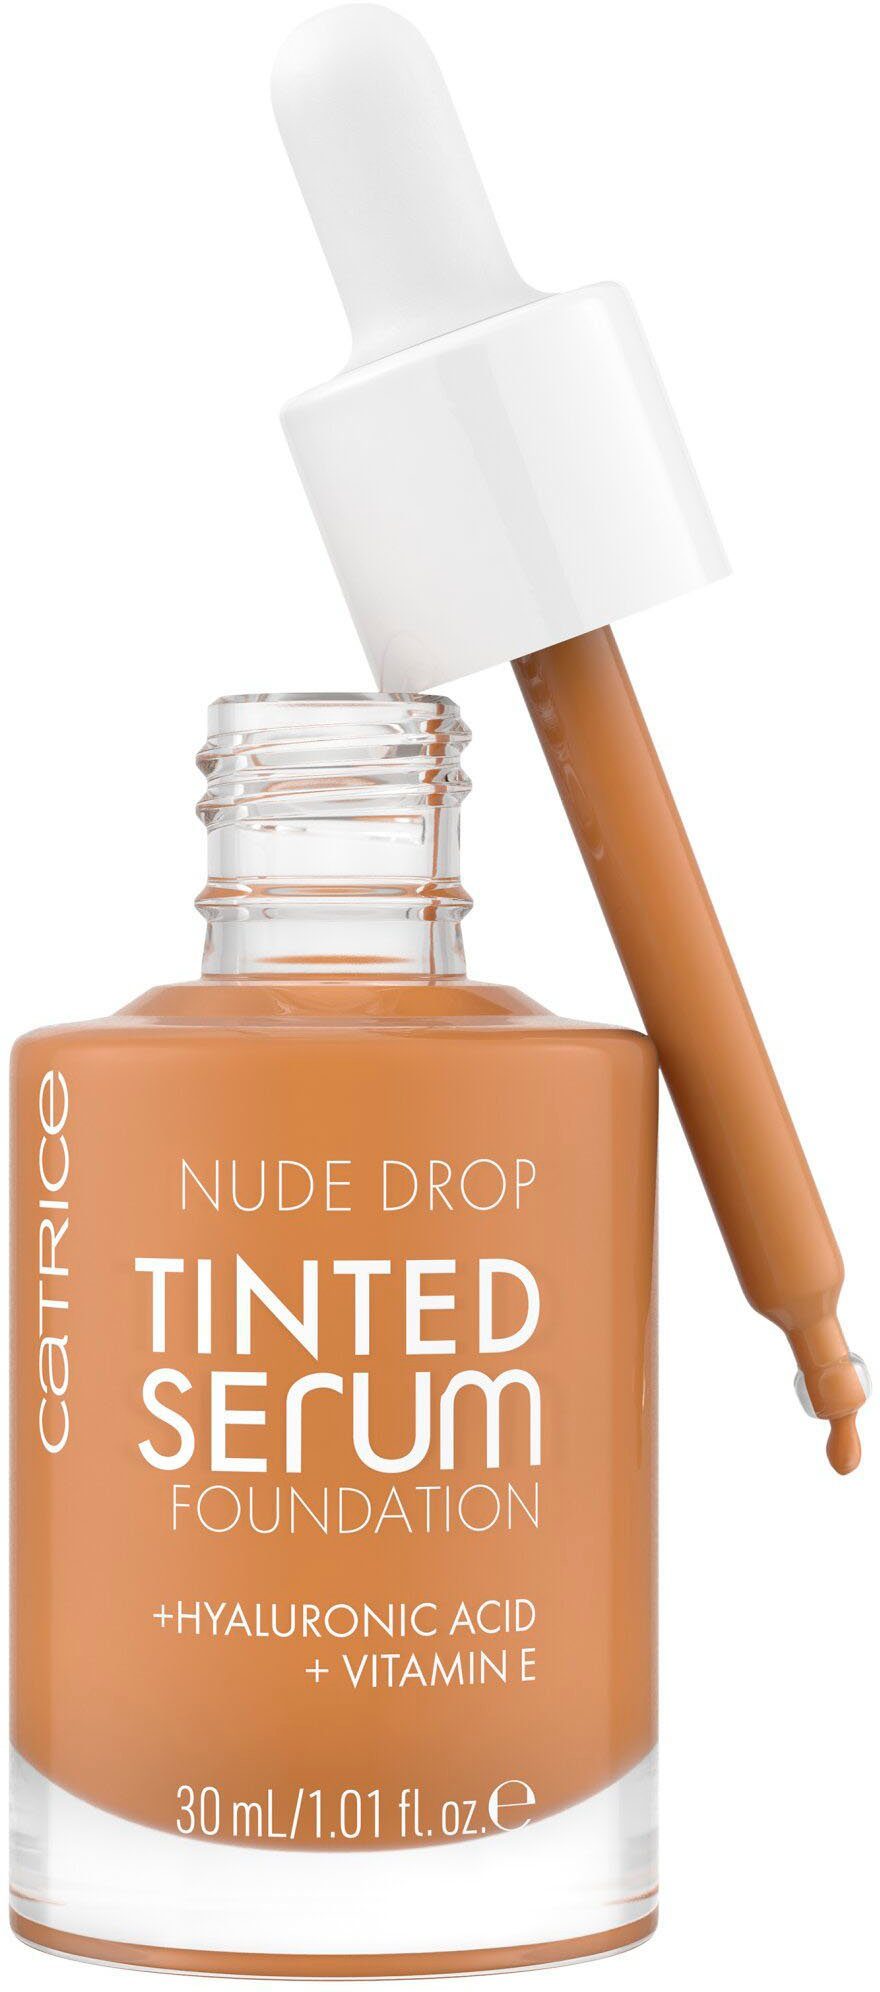 Foundation Foundation Serum nude Tinted Drop Nude Catrice 075C